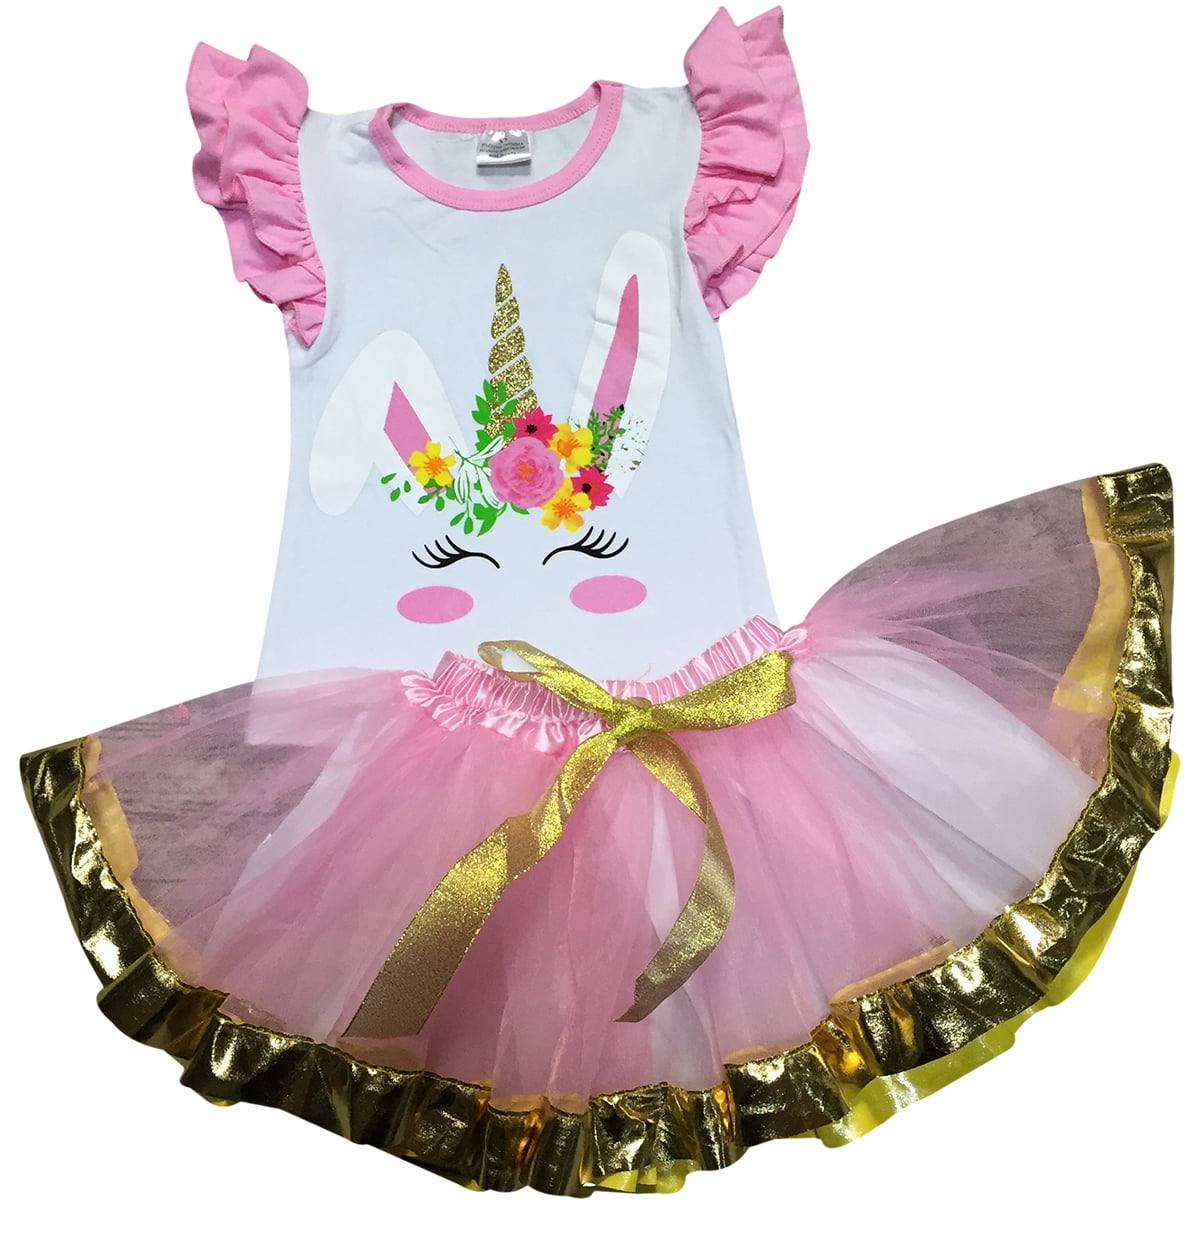 2-piece Charming Fairy Sequin Tee and Rainbow Tutu Skirt Set for Girls 